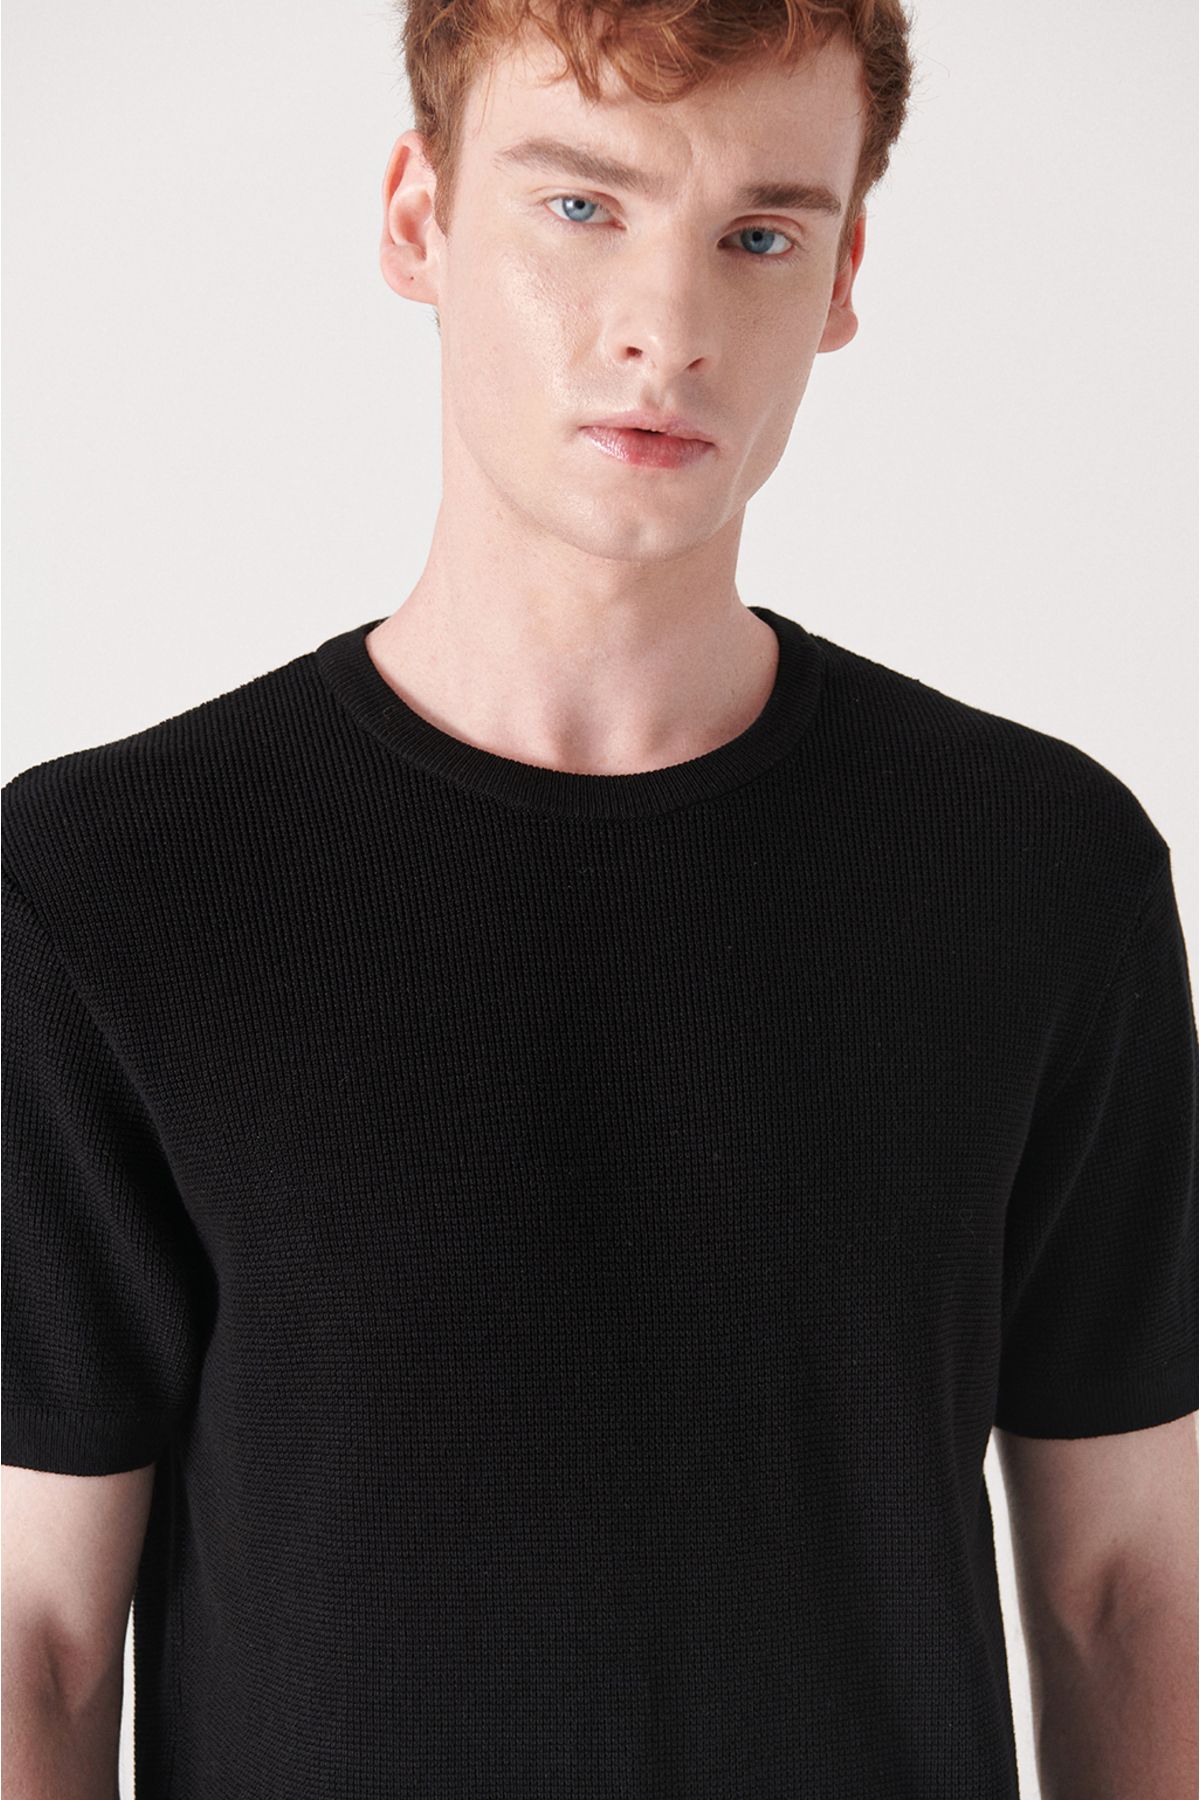 Avva تی شرت بافتنی مردانه یقه مشکی با بافت استاندارد برش معمولی B005010